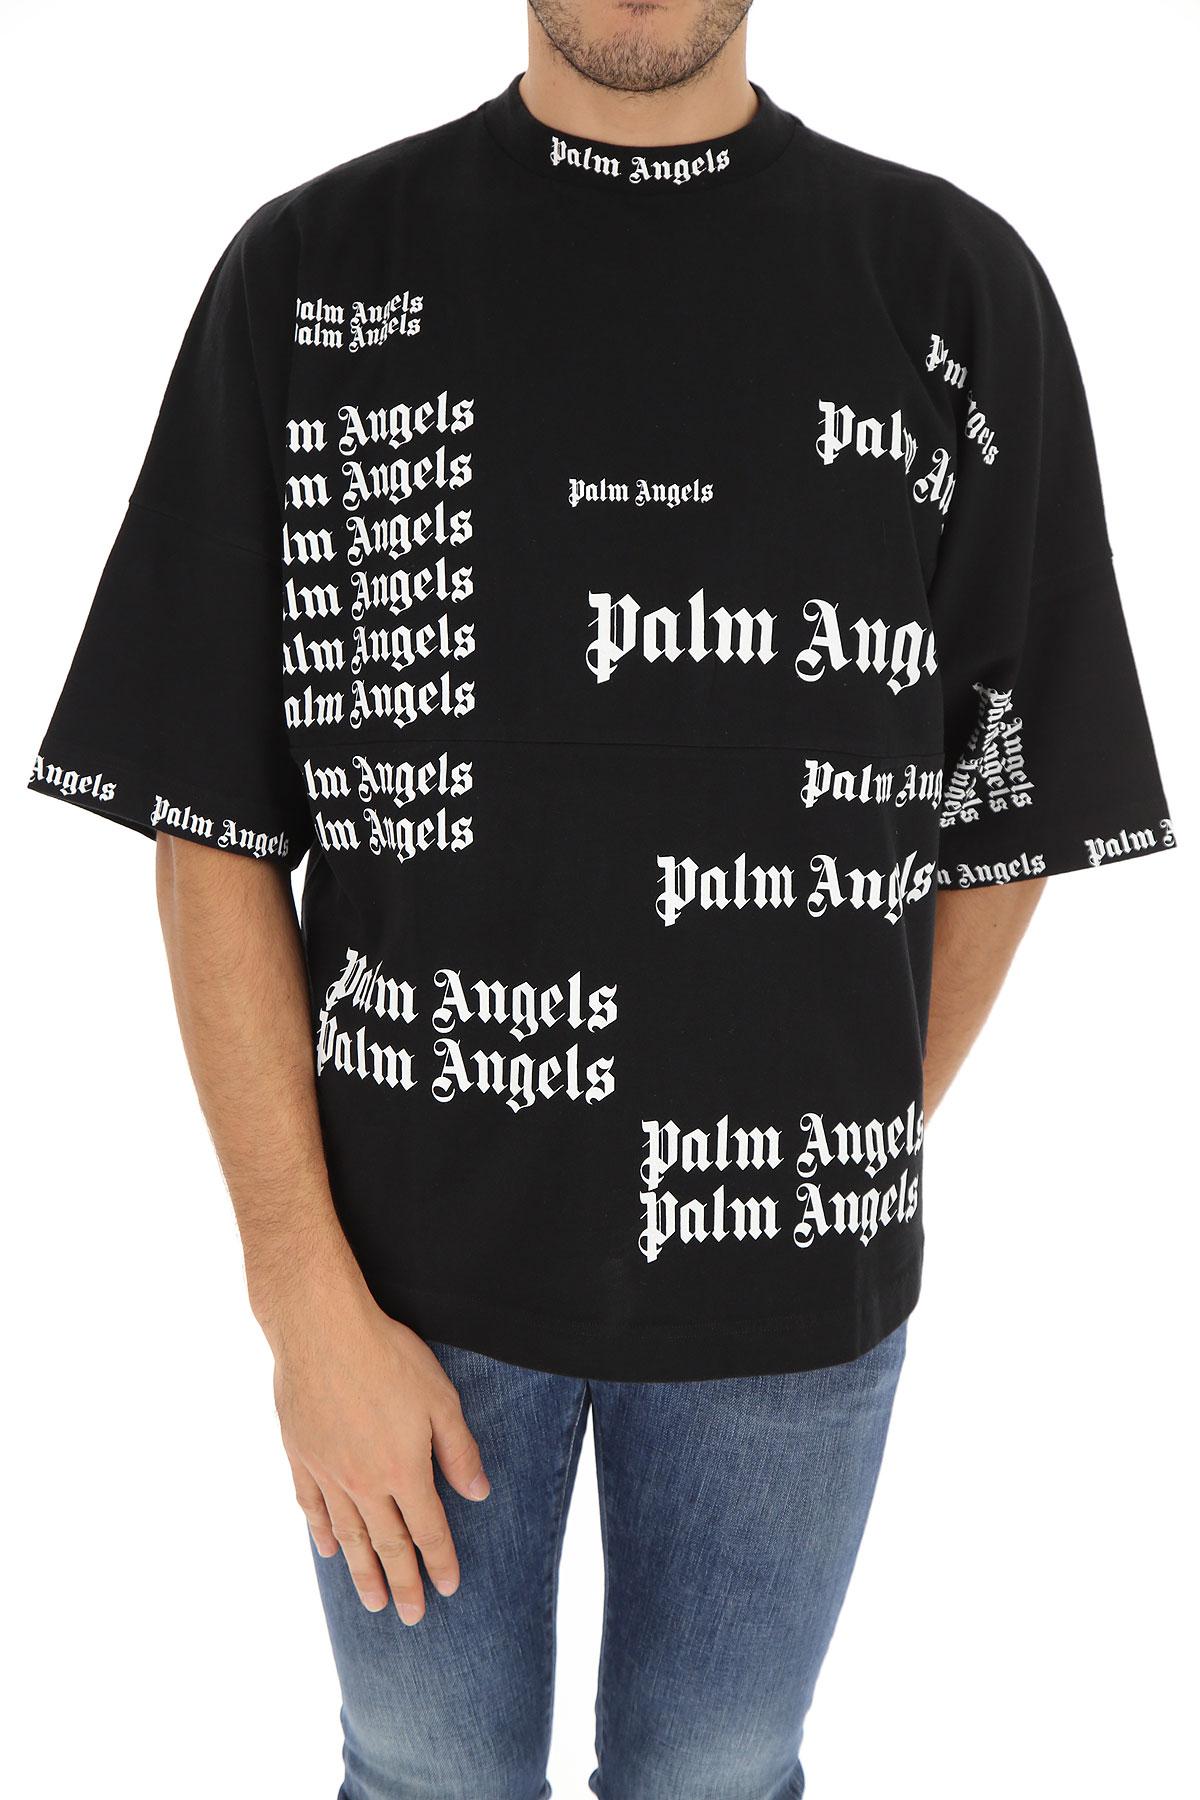 palm angels shirt sale